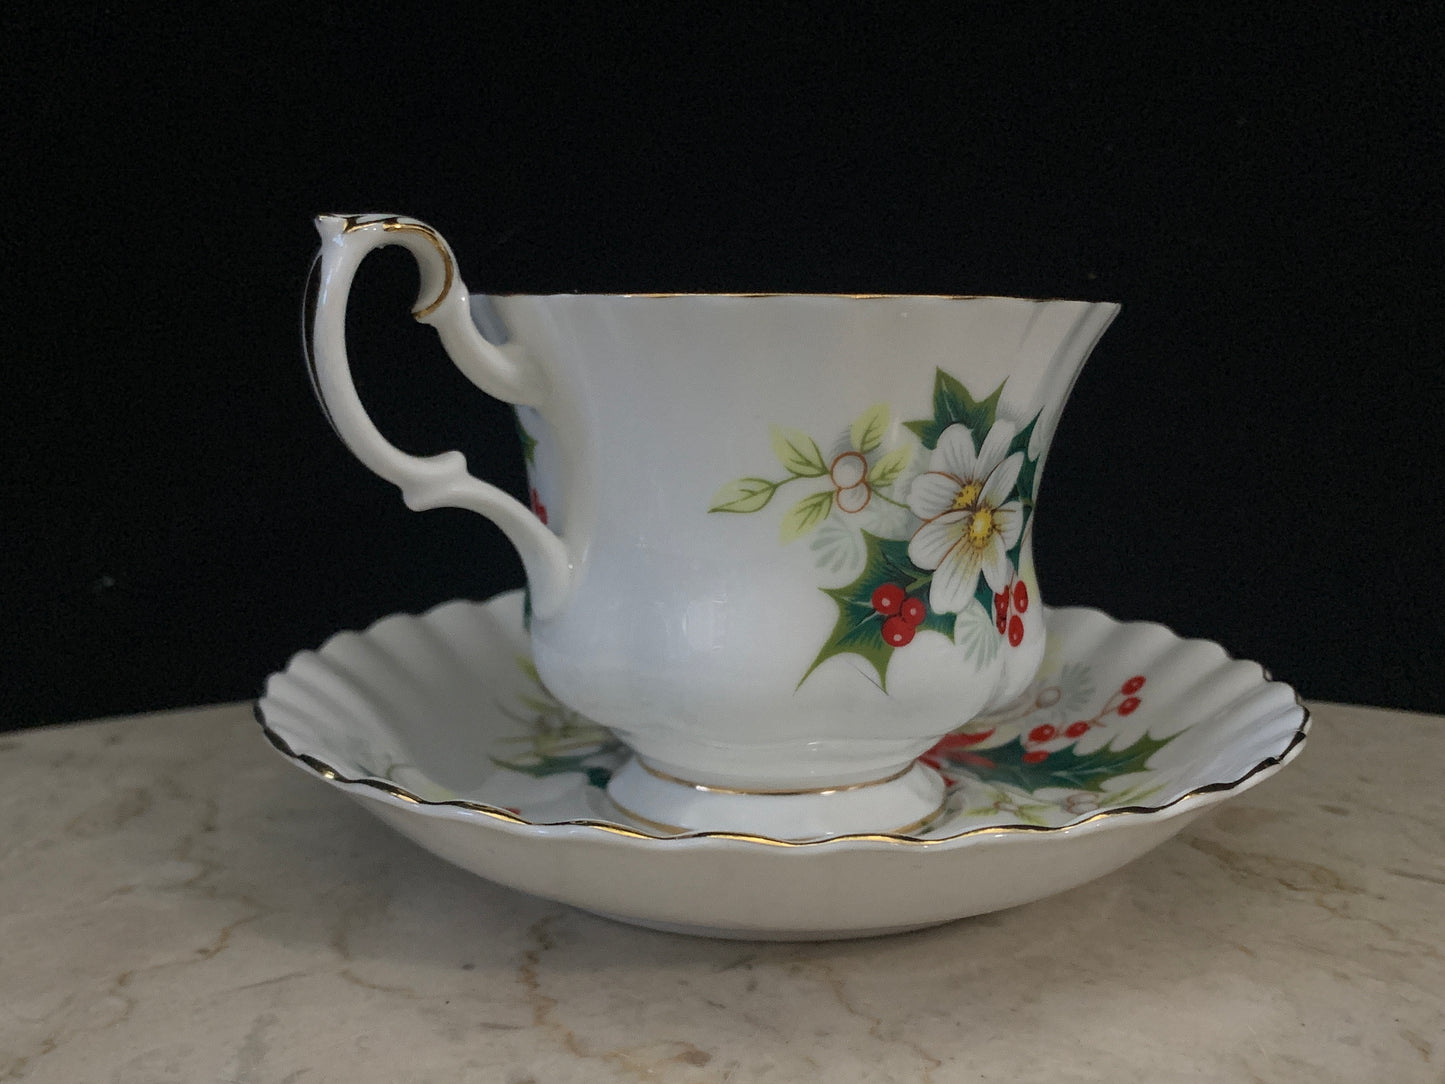 Vintage Royal Albert Yuletide Tea Cup and Saucer Set Christmas Teacup and Saucer Set